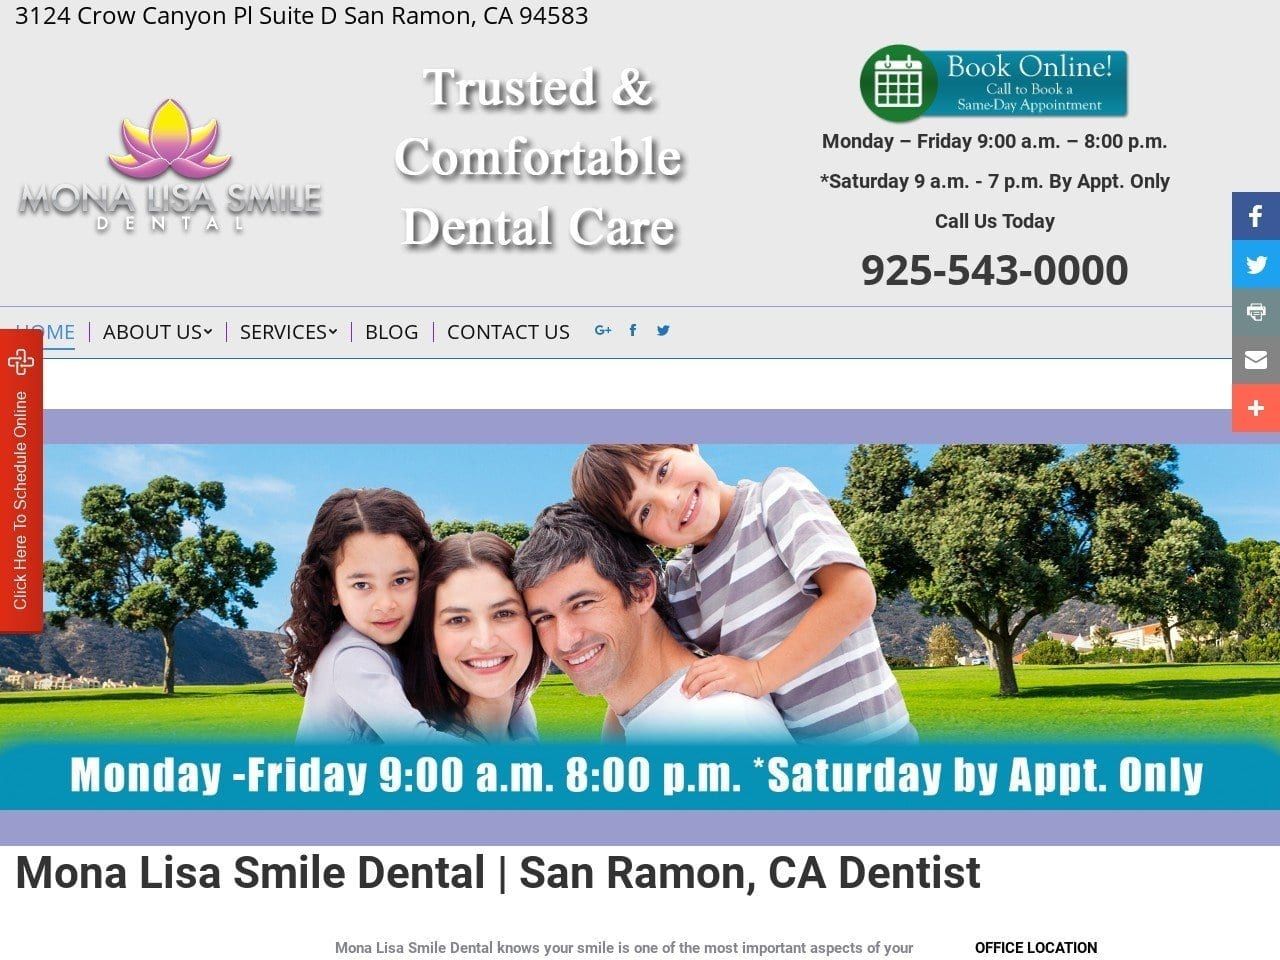 Mona Lisa Smile Dental of San Ramon Website Screenshot from monalisasmiledental.com